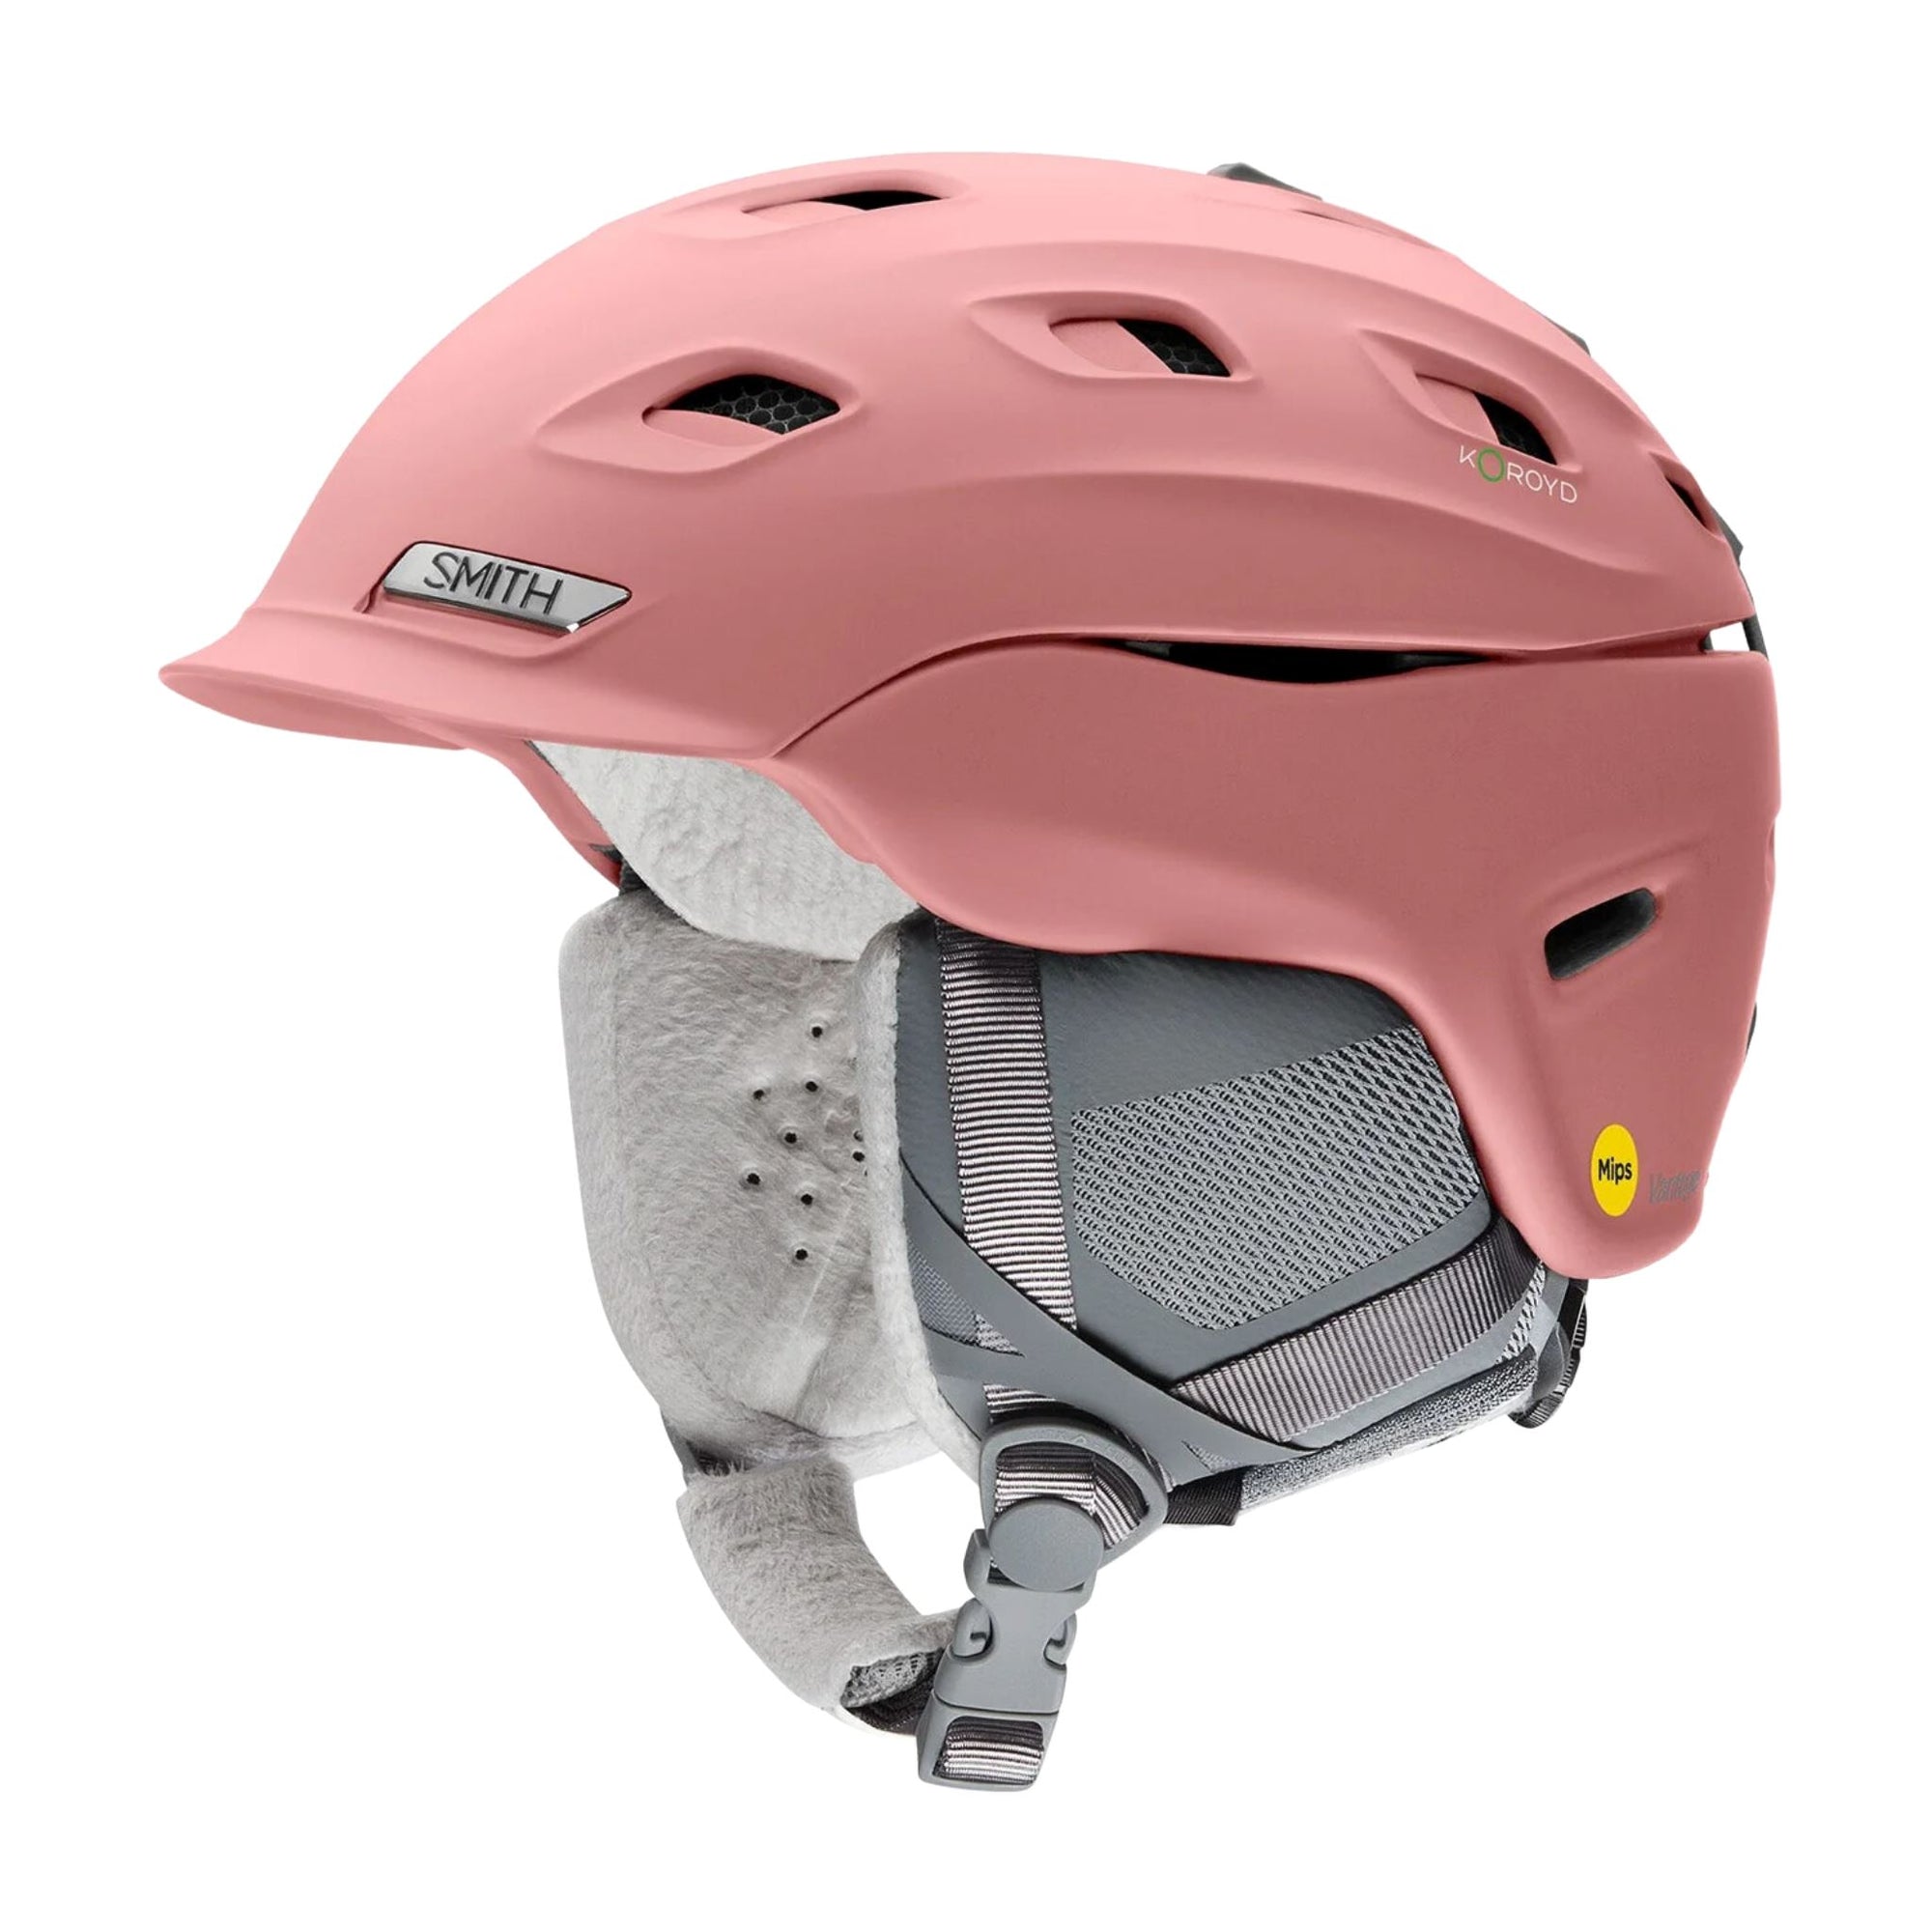 Womens Smith Vantage MIPS Helmet - Matte Chalk Rose Helmets Smith S - (51-55CM) 